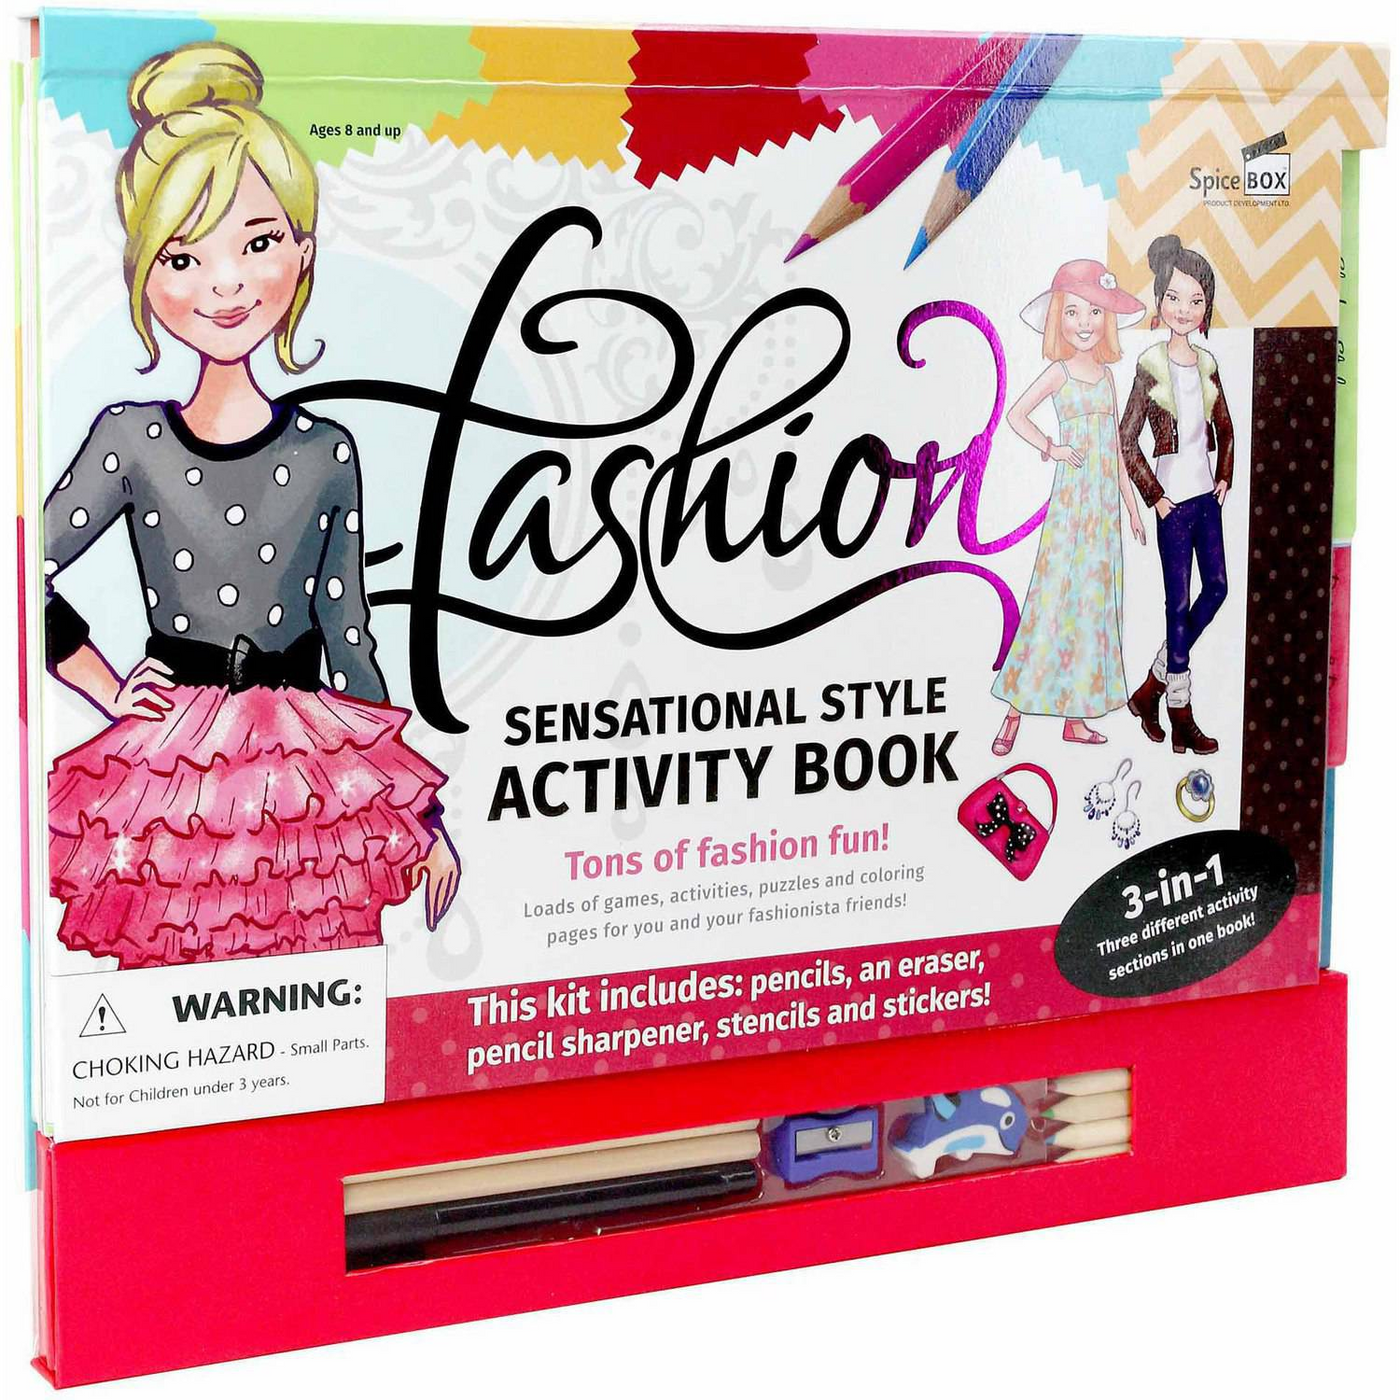 SpiceBox - 11875  Fashion Sensational Style Activity Book V2